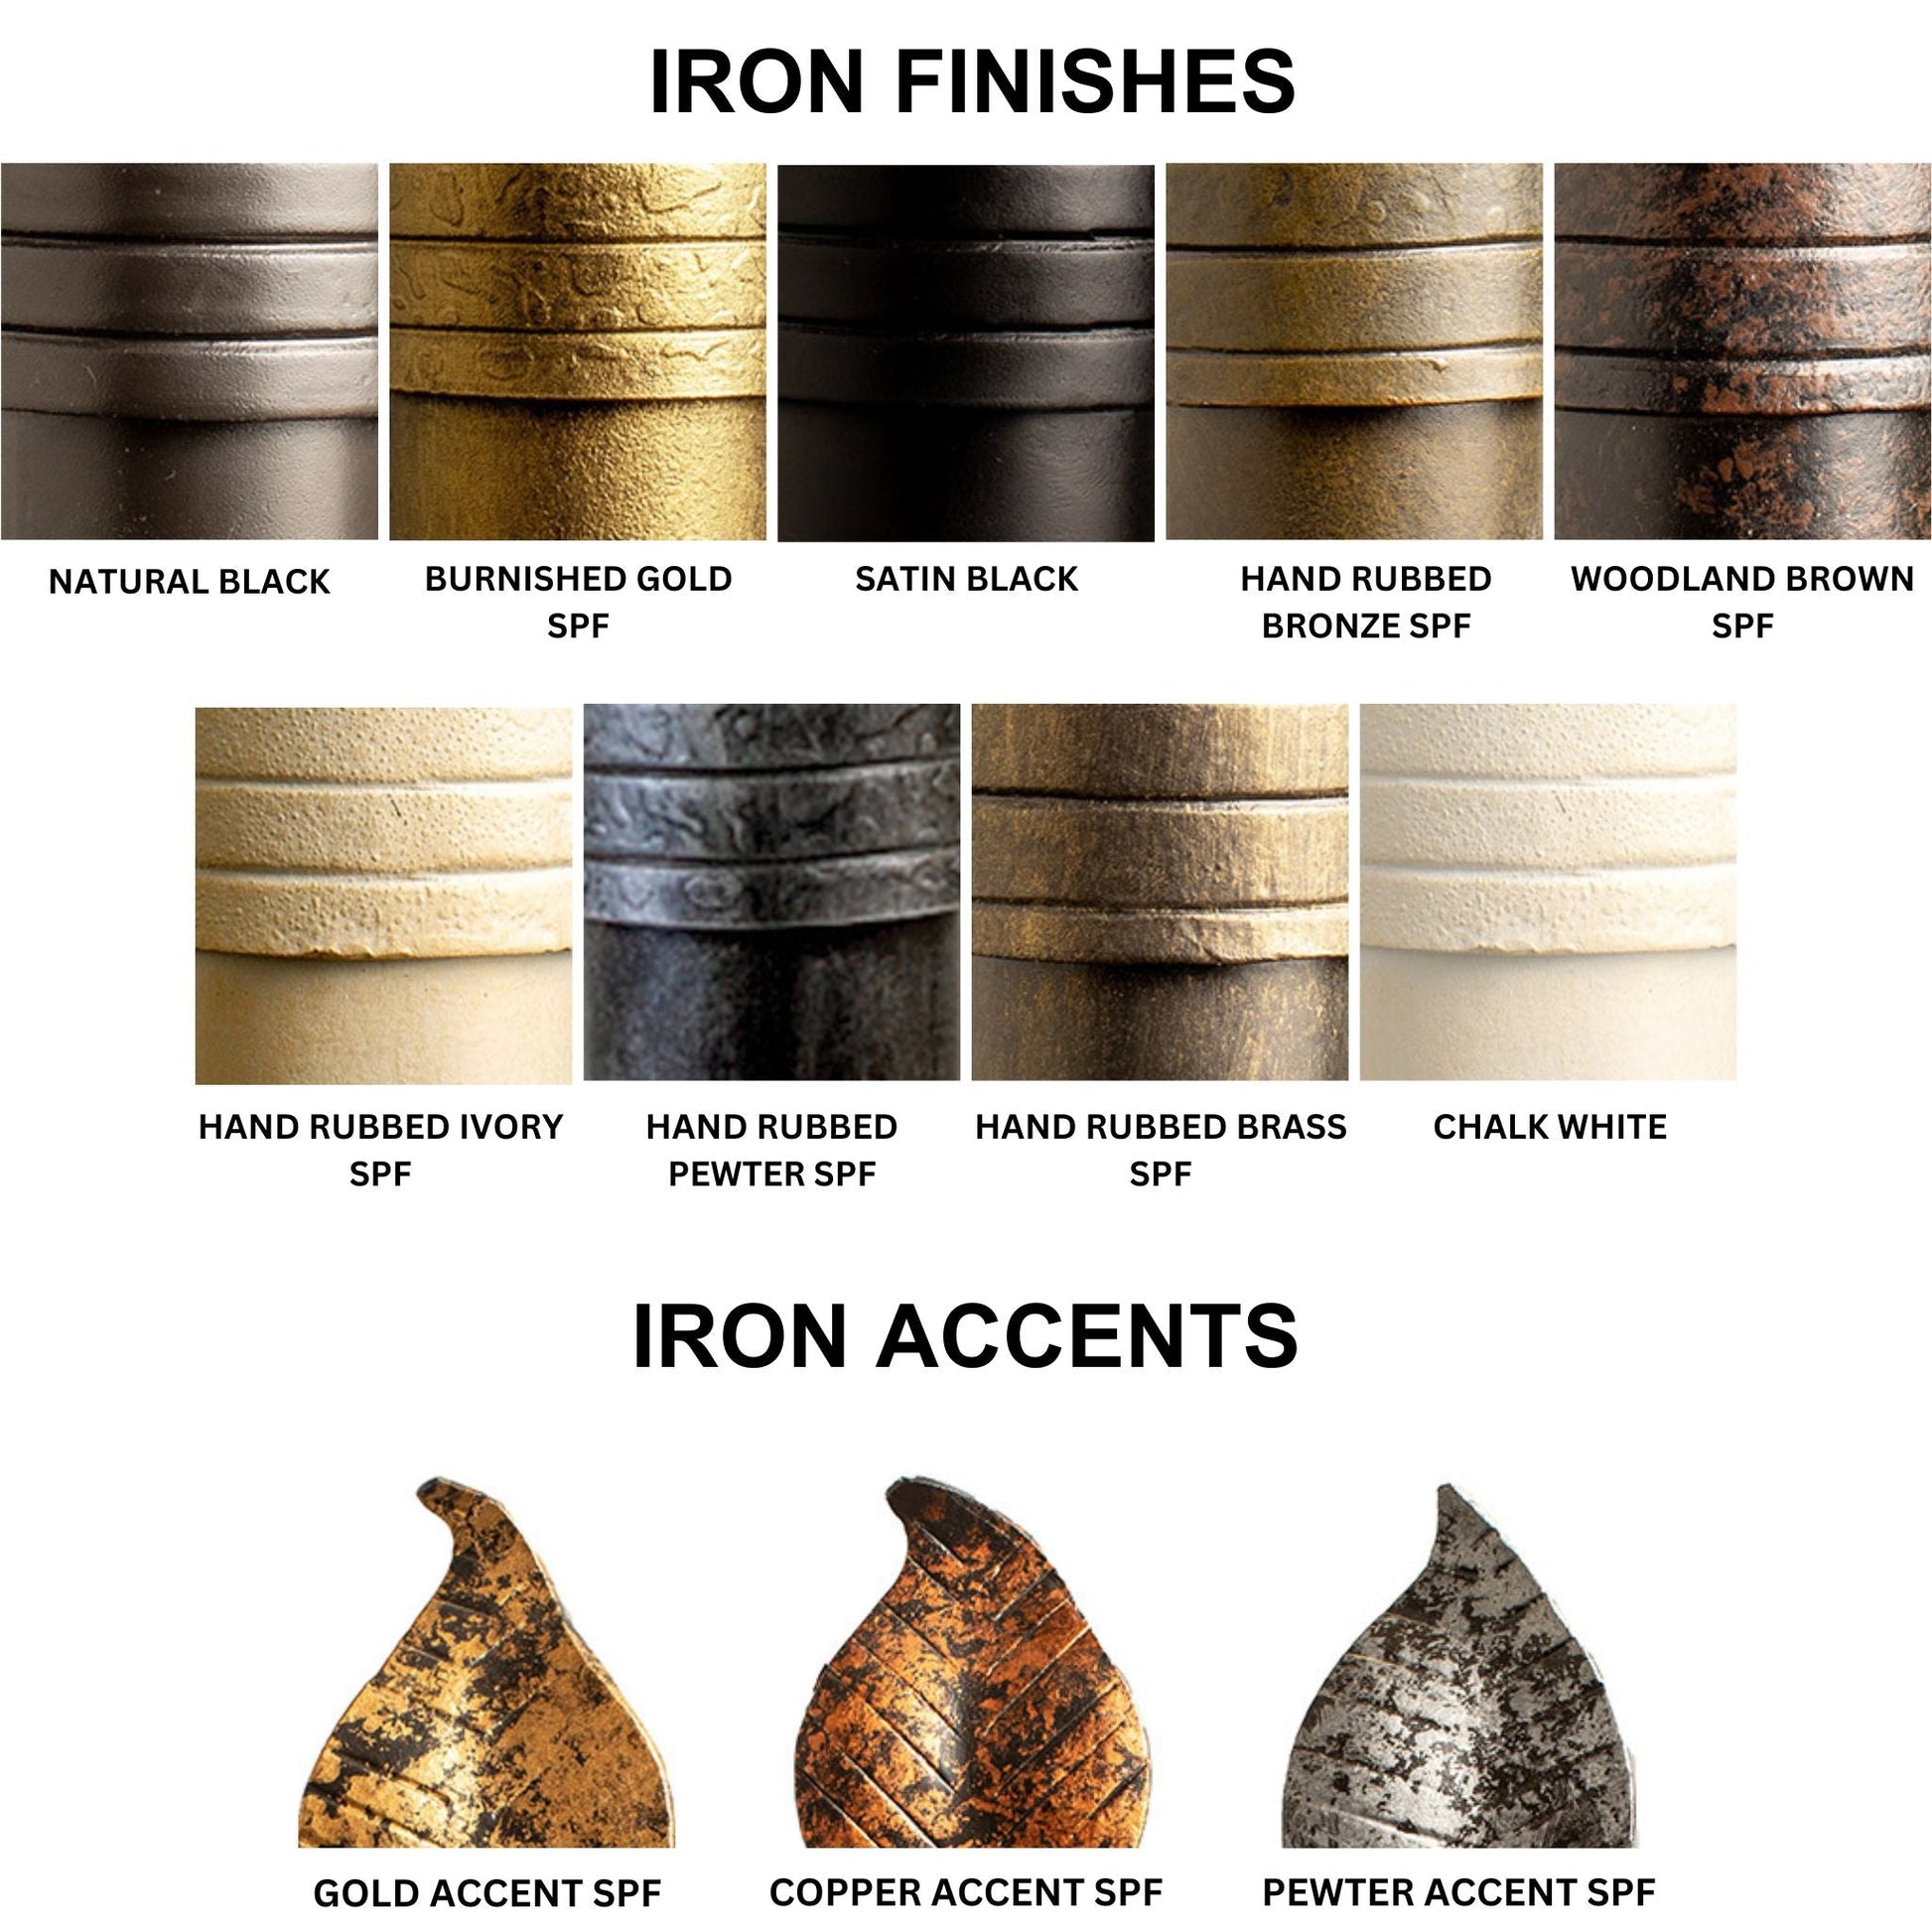 Stone County Ironworks Sassafras 24" Burnished Gold Iron Towel Bar With Gold Iron Accent